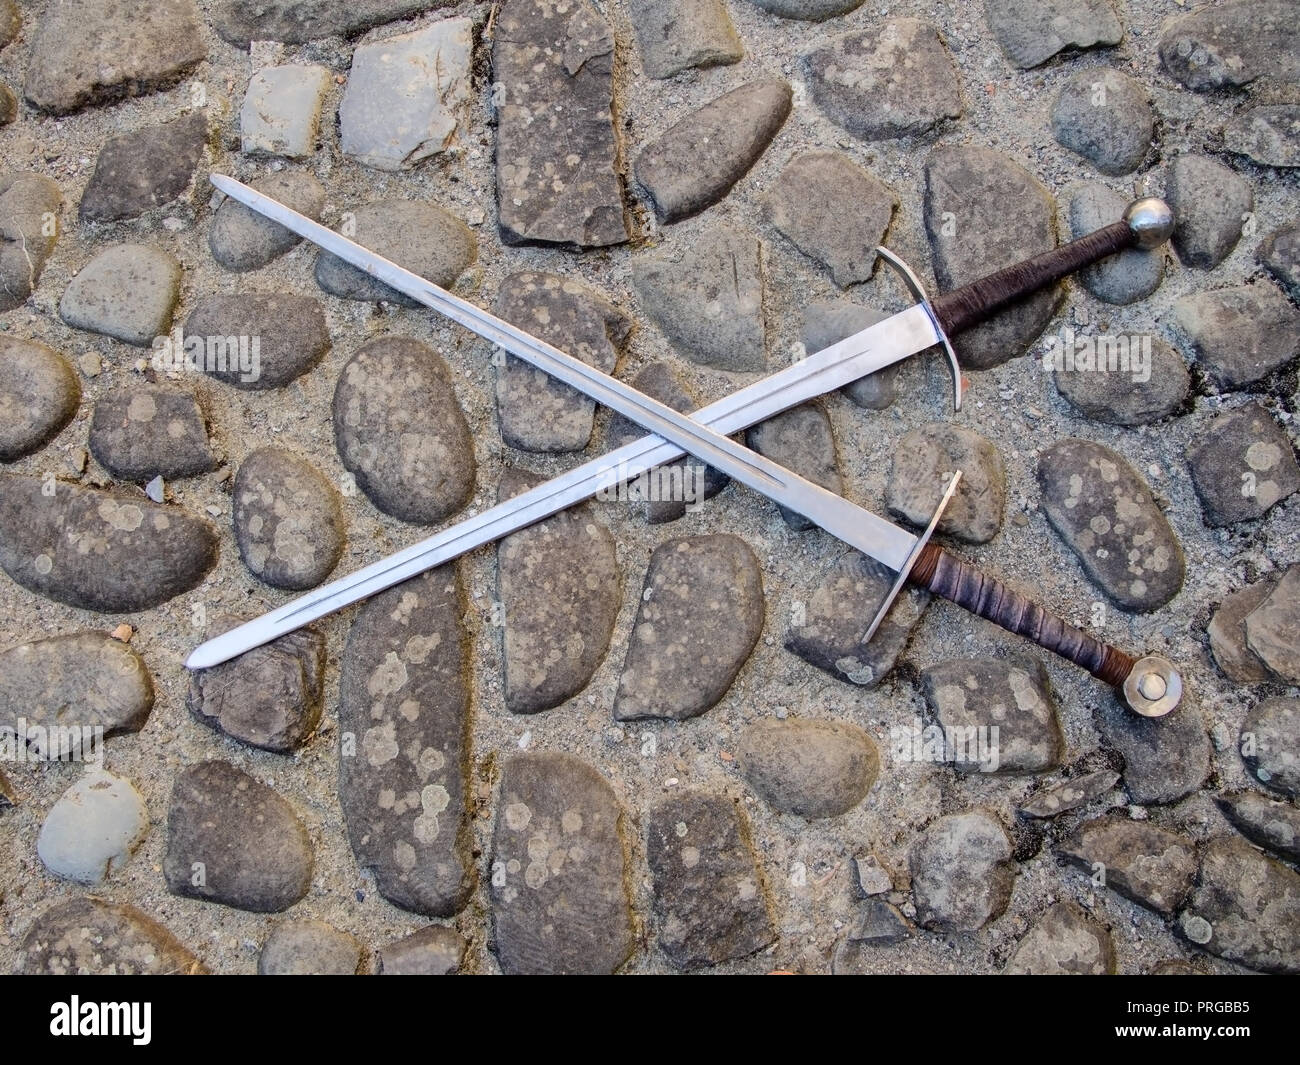 Two medieval swords, crossed, on cobblestone floor. Stock Photo